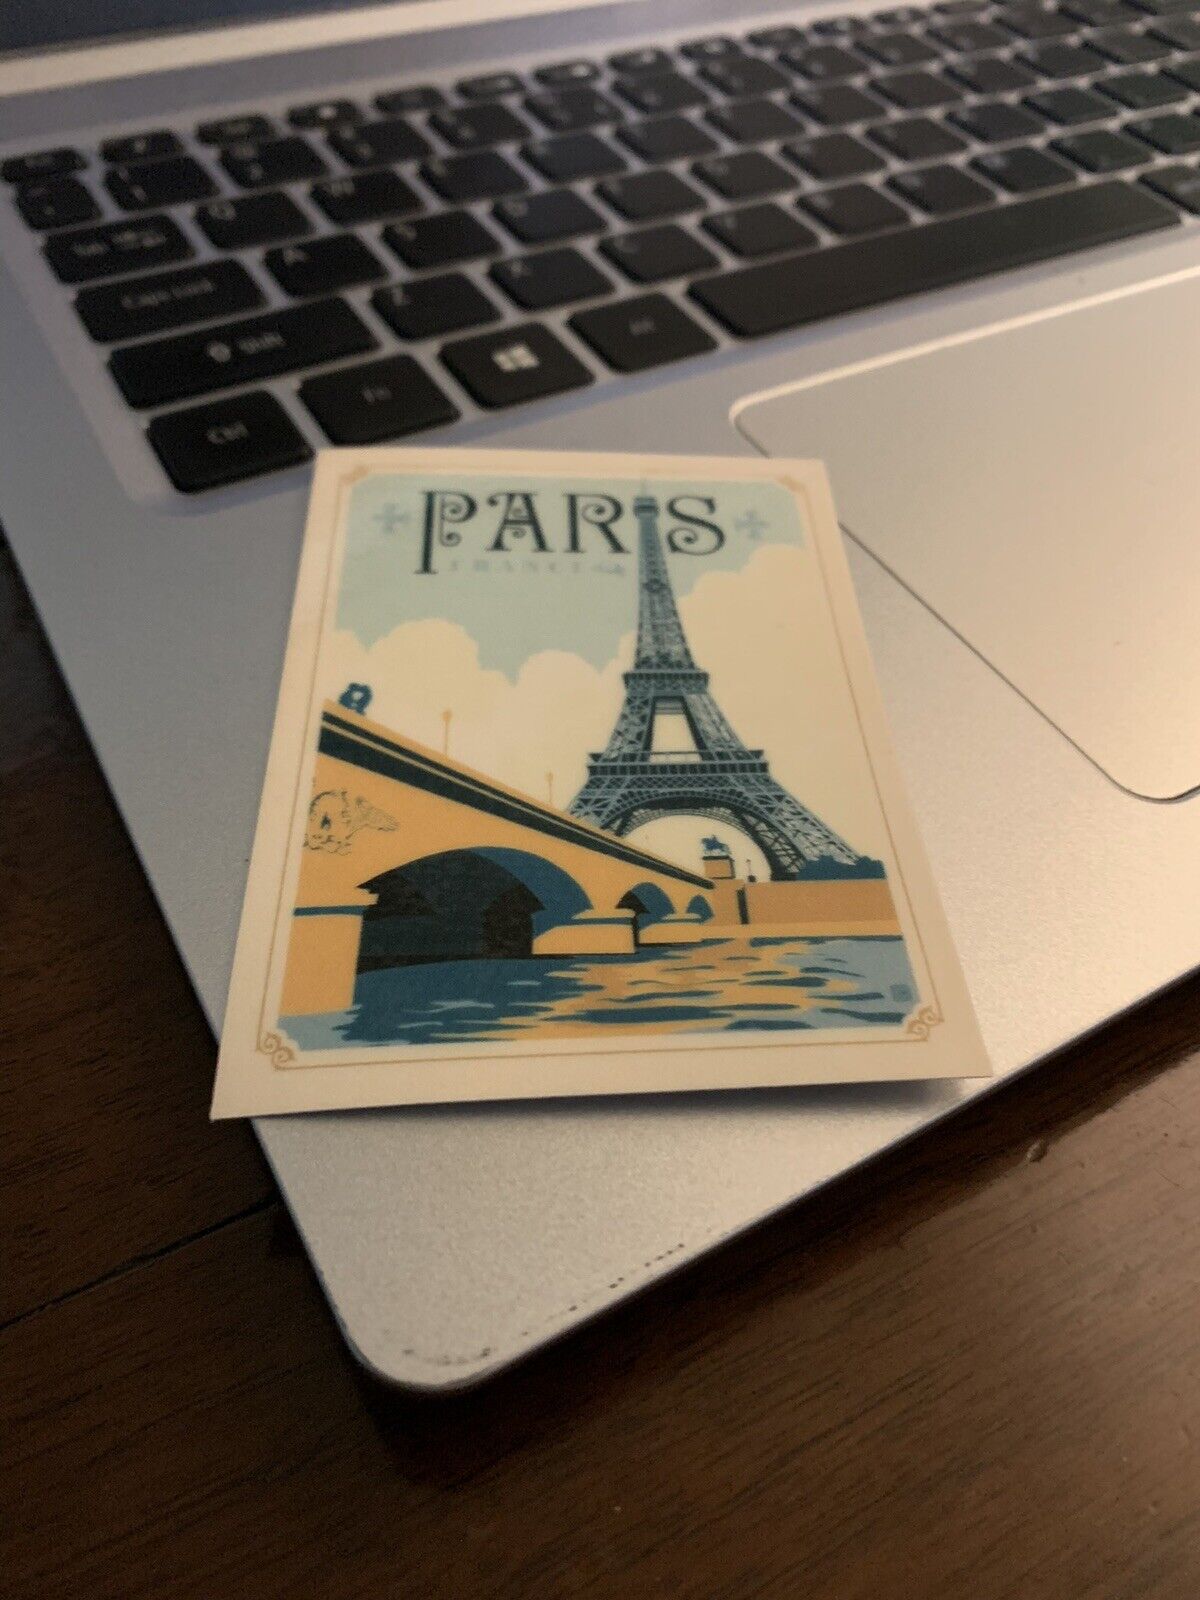 PARIS France Travel  Souvenir Sticker. Vintage Stye Luggage Decal.